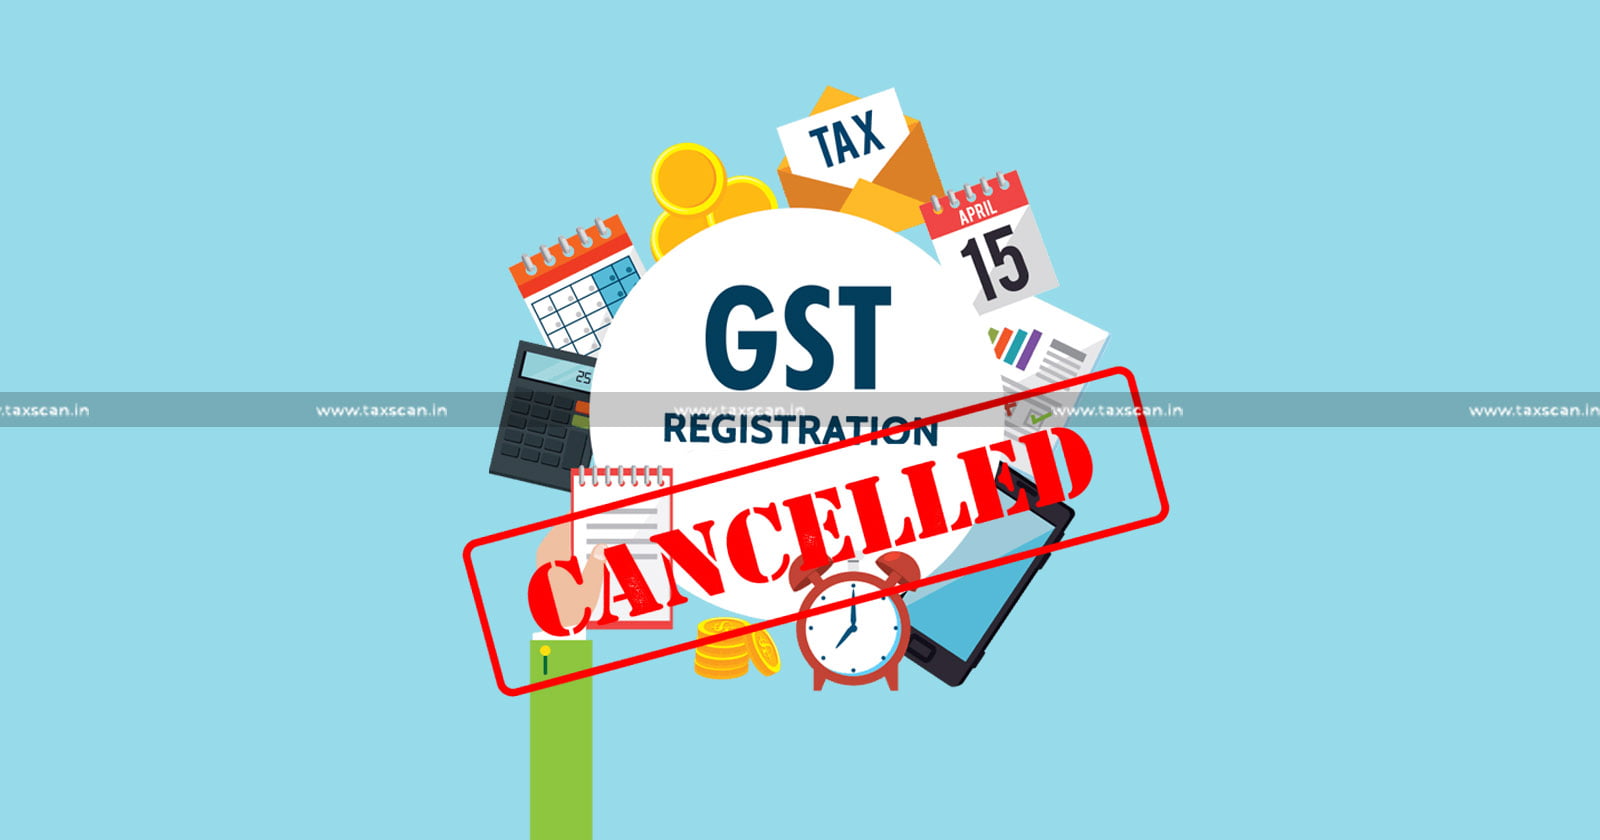 Cancellation GST Registration - Delhi High Court - Non-Filing of Return - taxscan